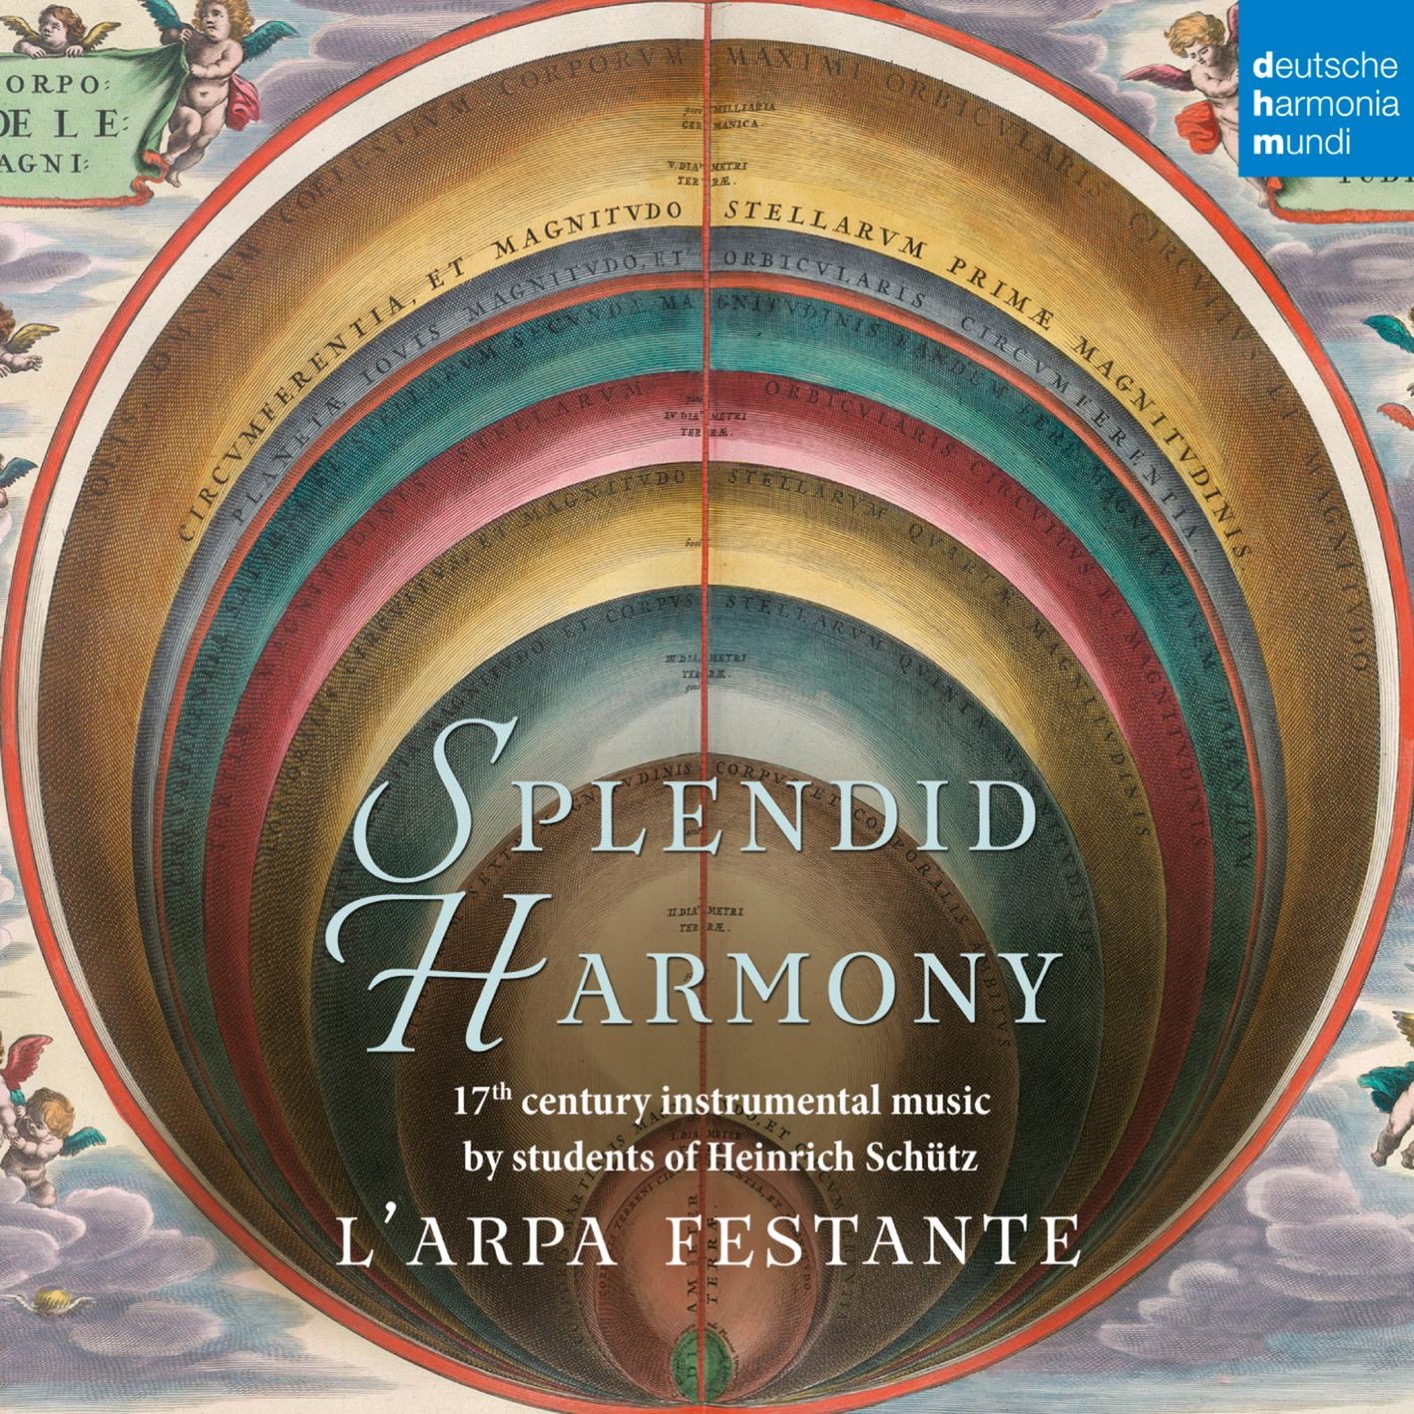 L’Arpa Festante – Splendid Harmony – 17th Century Instrumental Music by Students of Heinrich Schutz (2017) [Qobuz FLAC 24bit/96kHz]